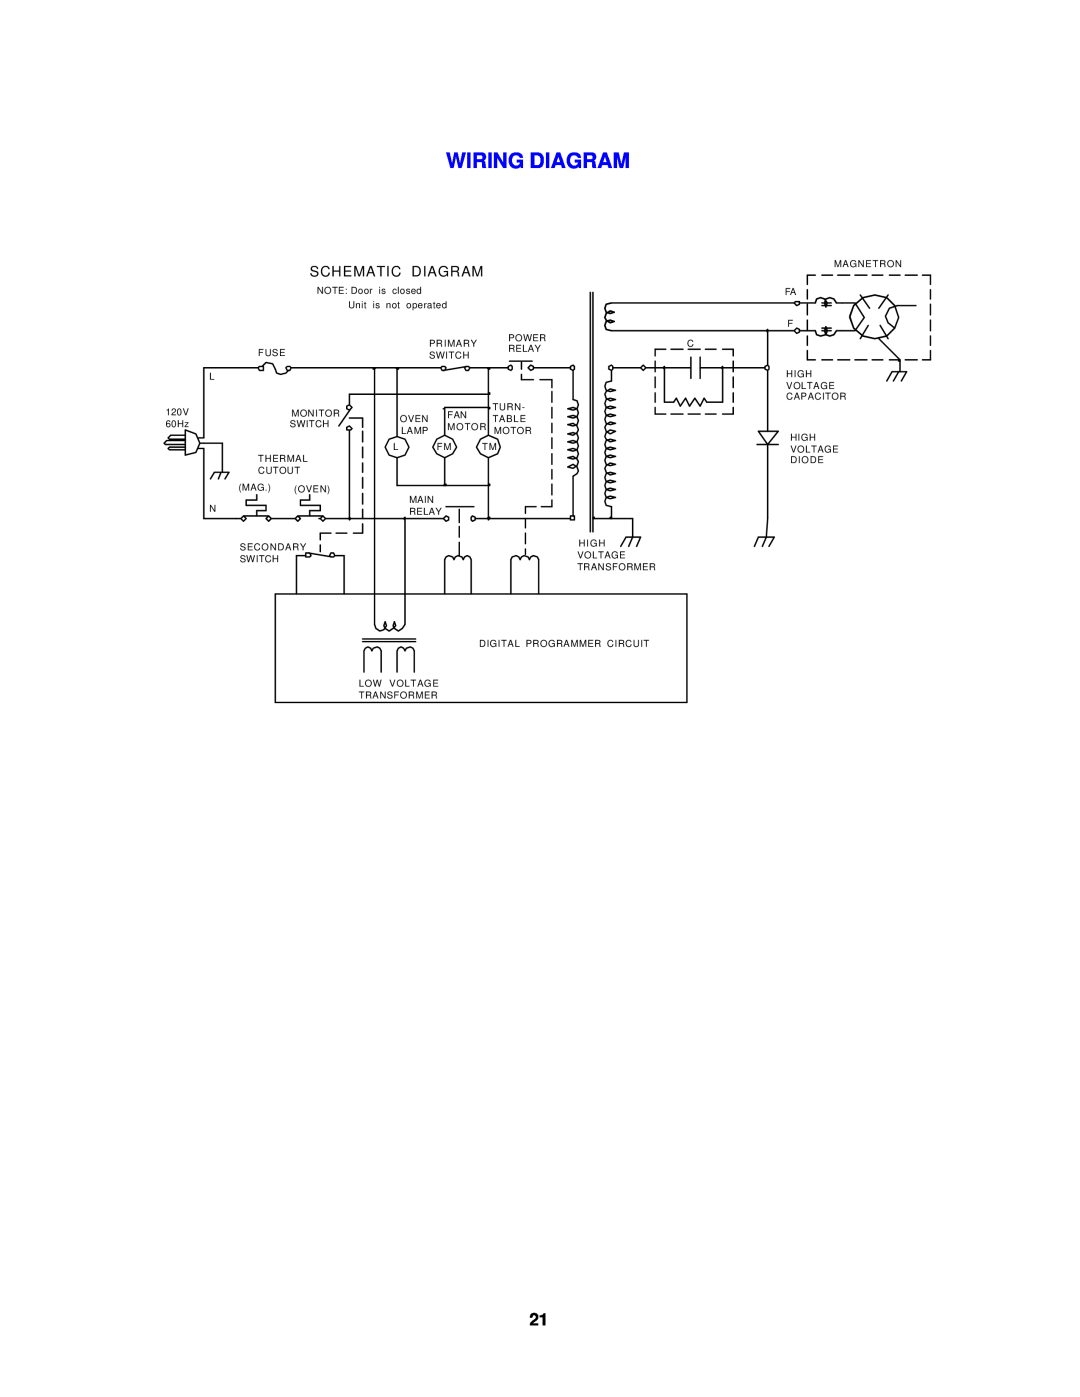 Avanti MO902SST-1 instruction manual Wiring Diagram, Schematic Diagram 